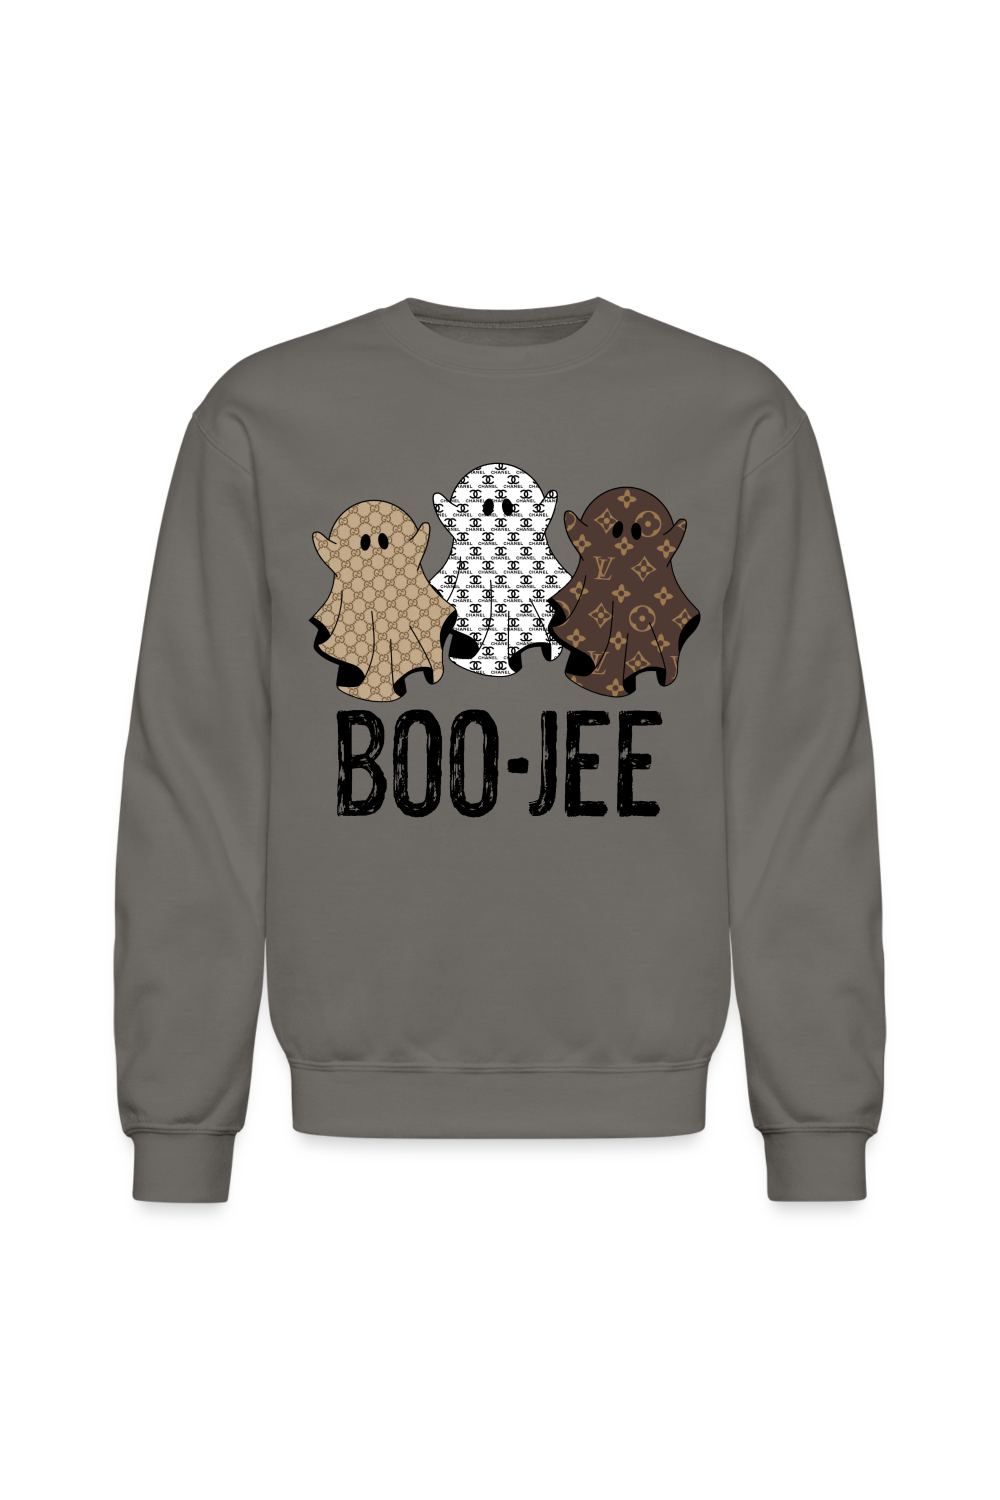 Women Boo - Jee Crewneck Sweatshirt - asphalt gray